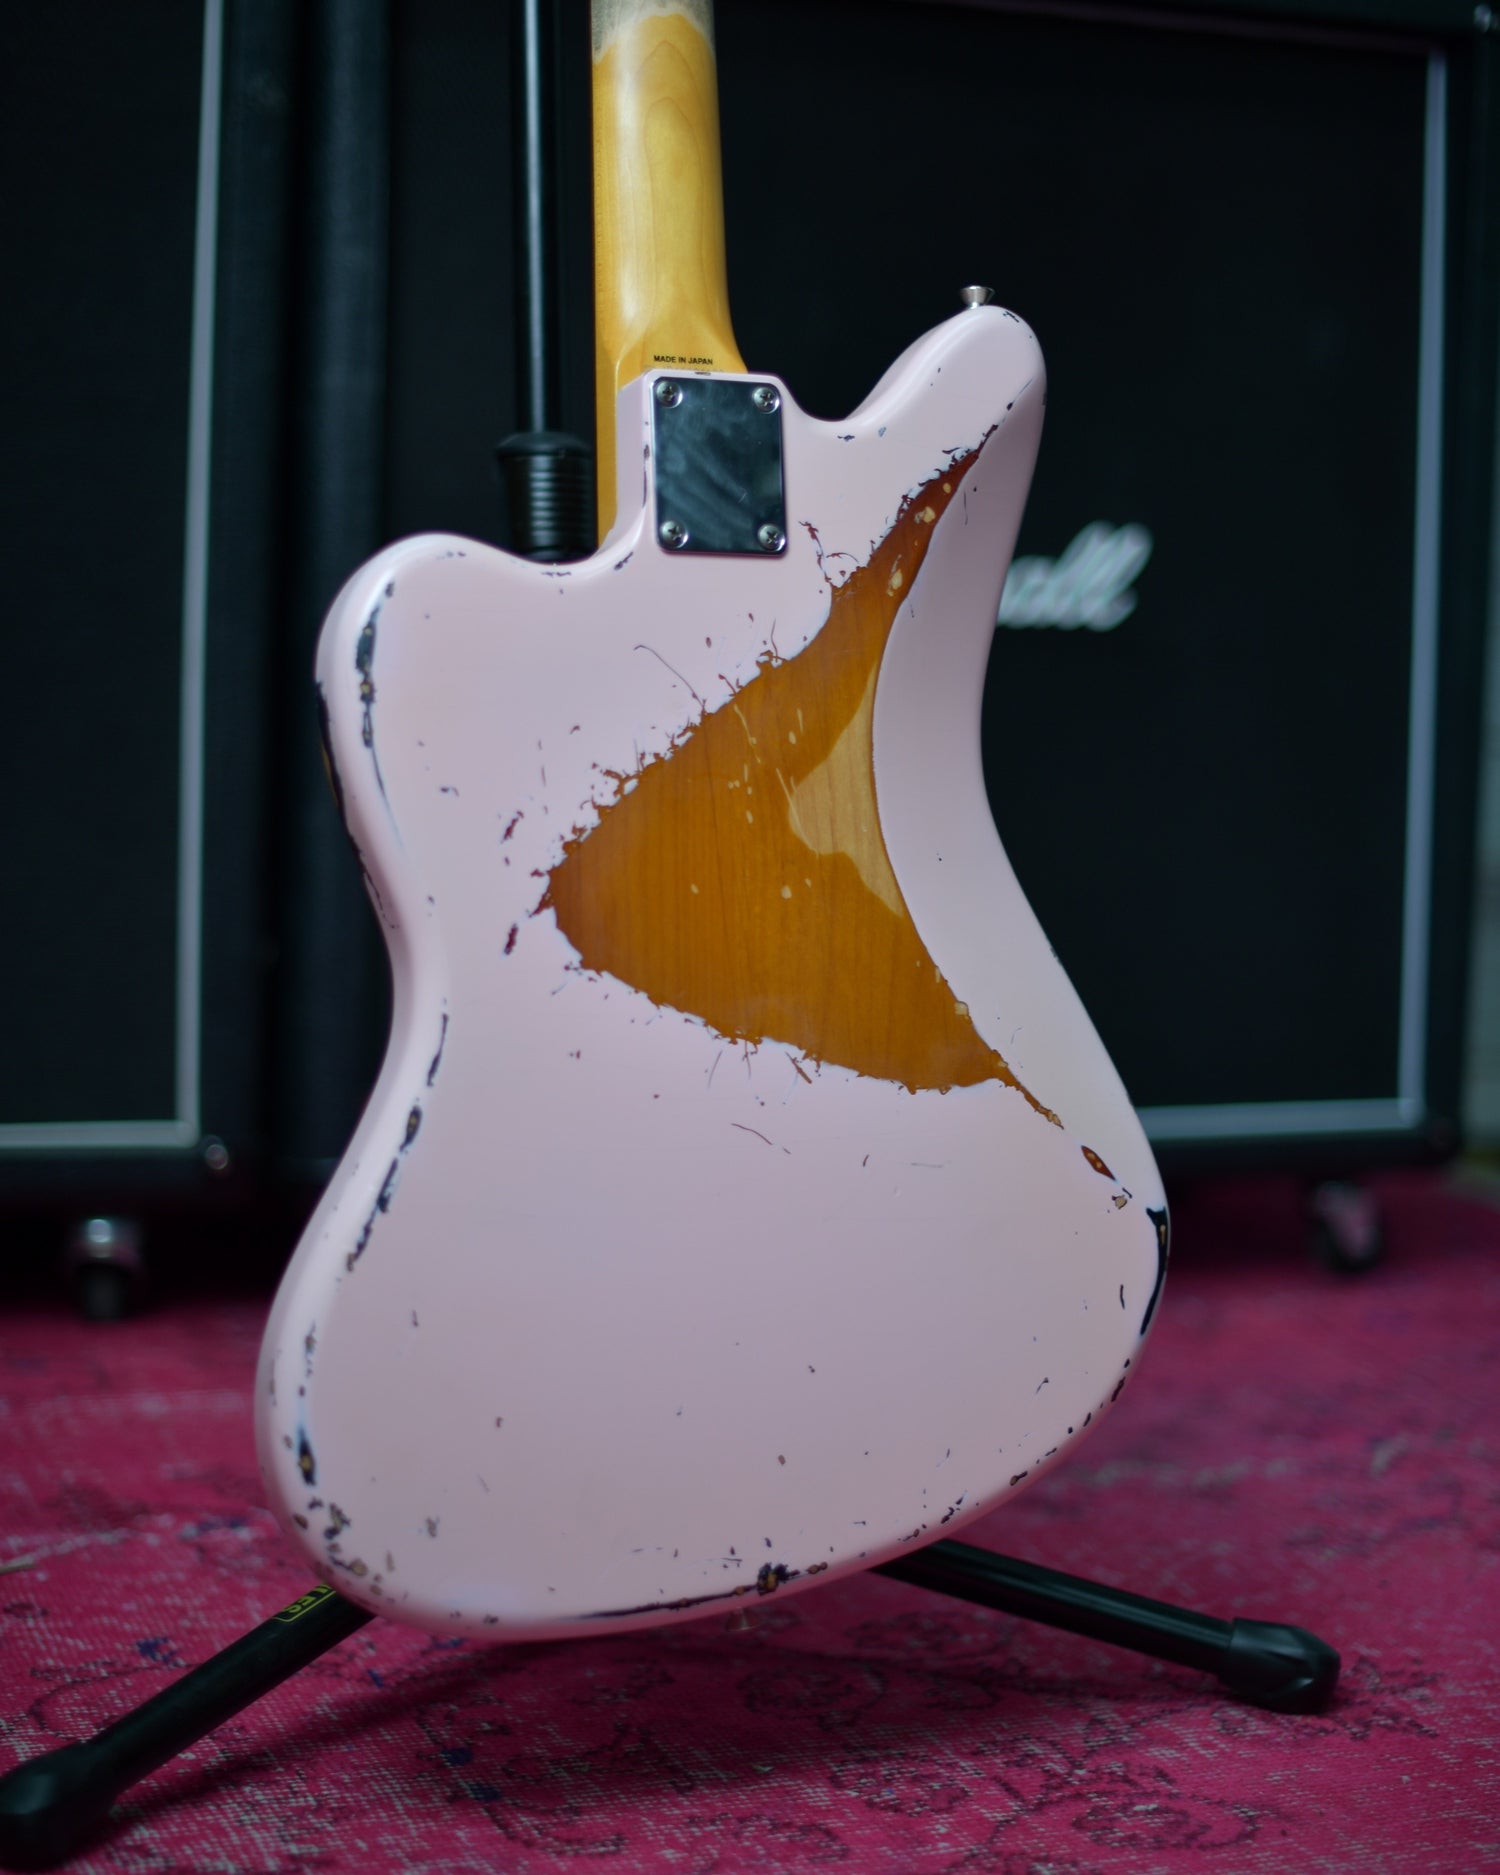 Fender Japan Jazzmaster Heavy Relic Shell Pink over 3TSB MIJ 2015